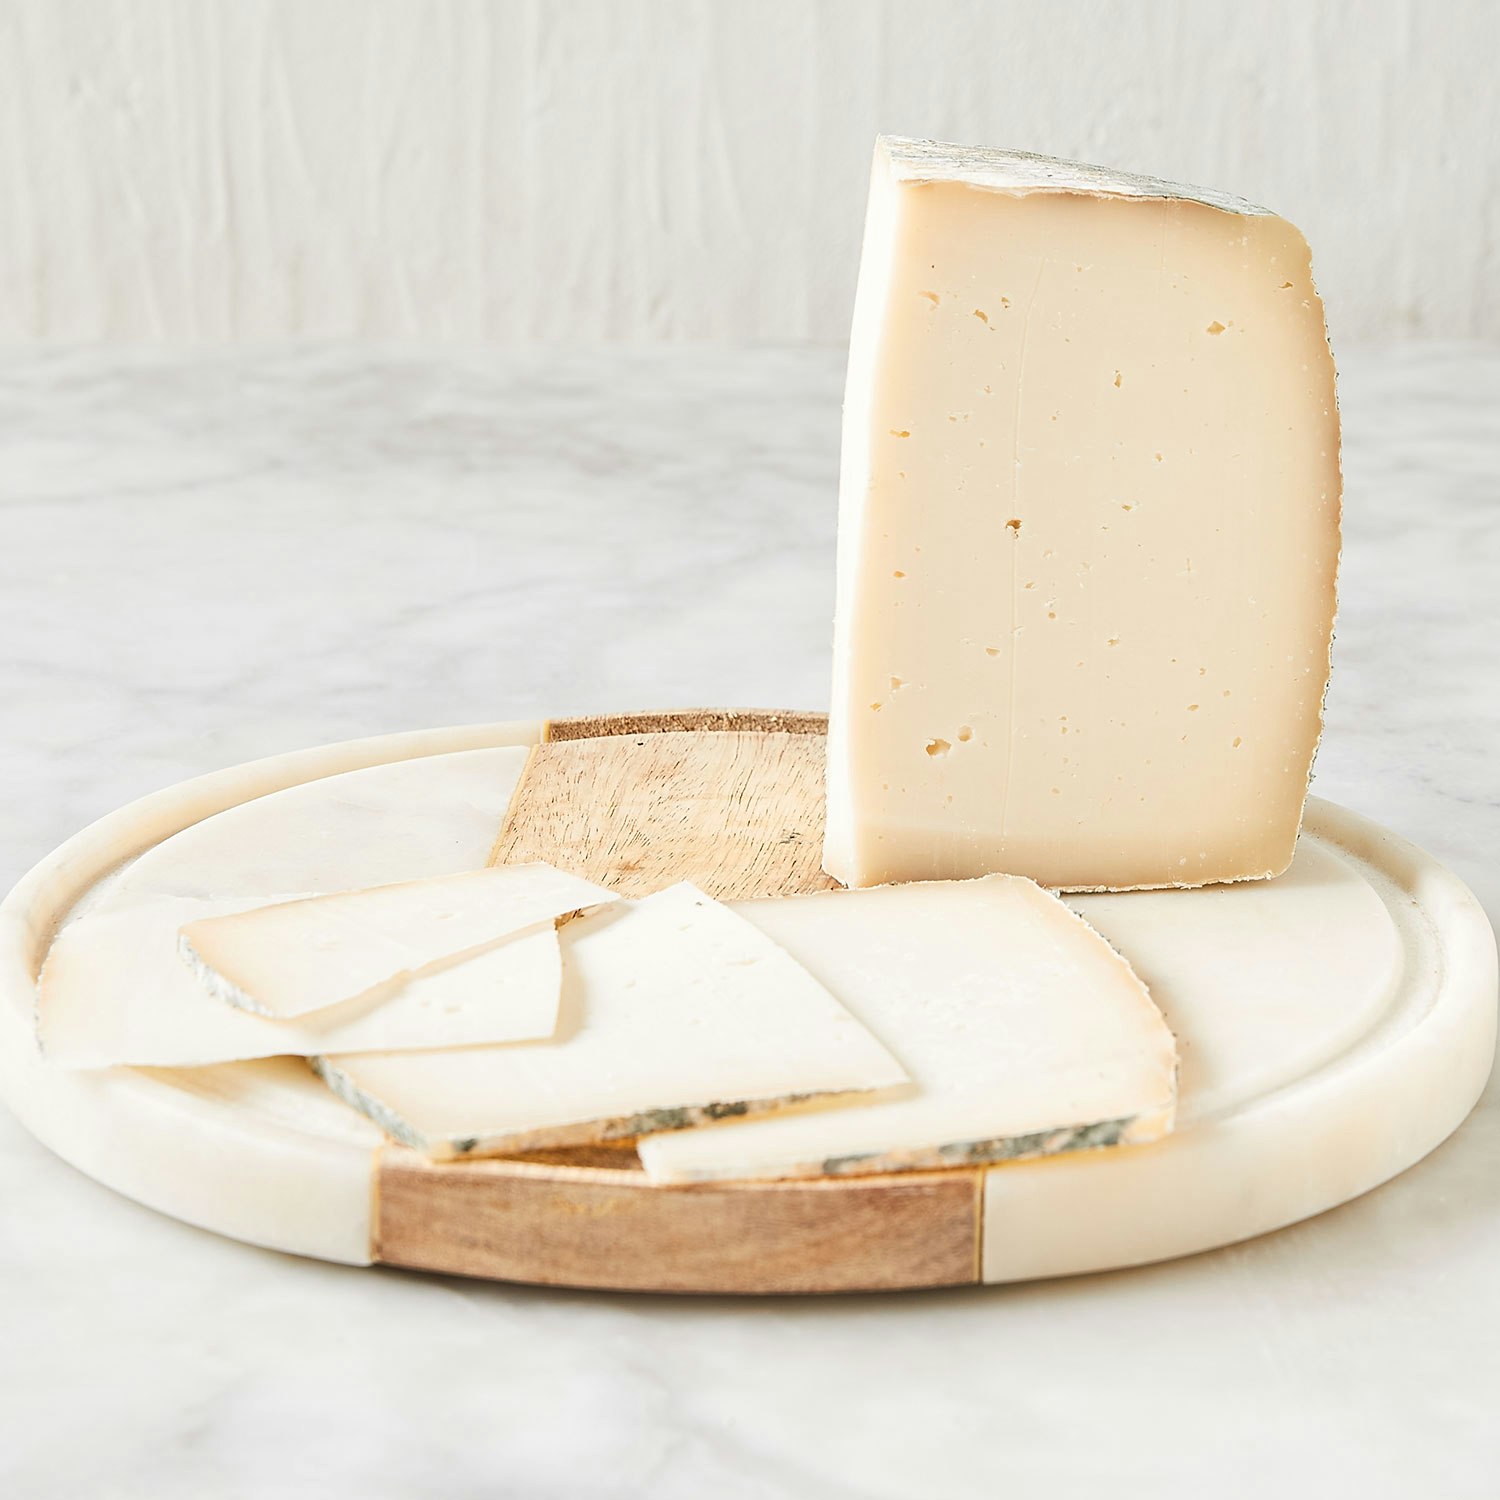 montealva cheese